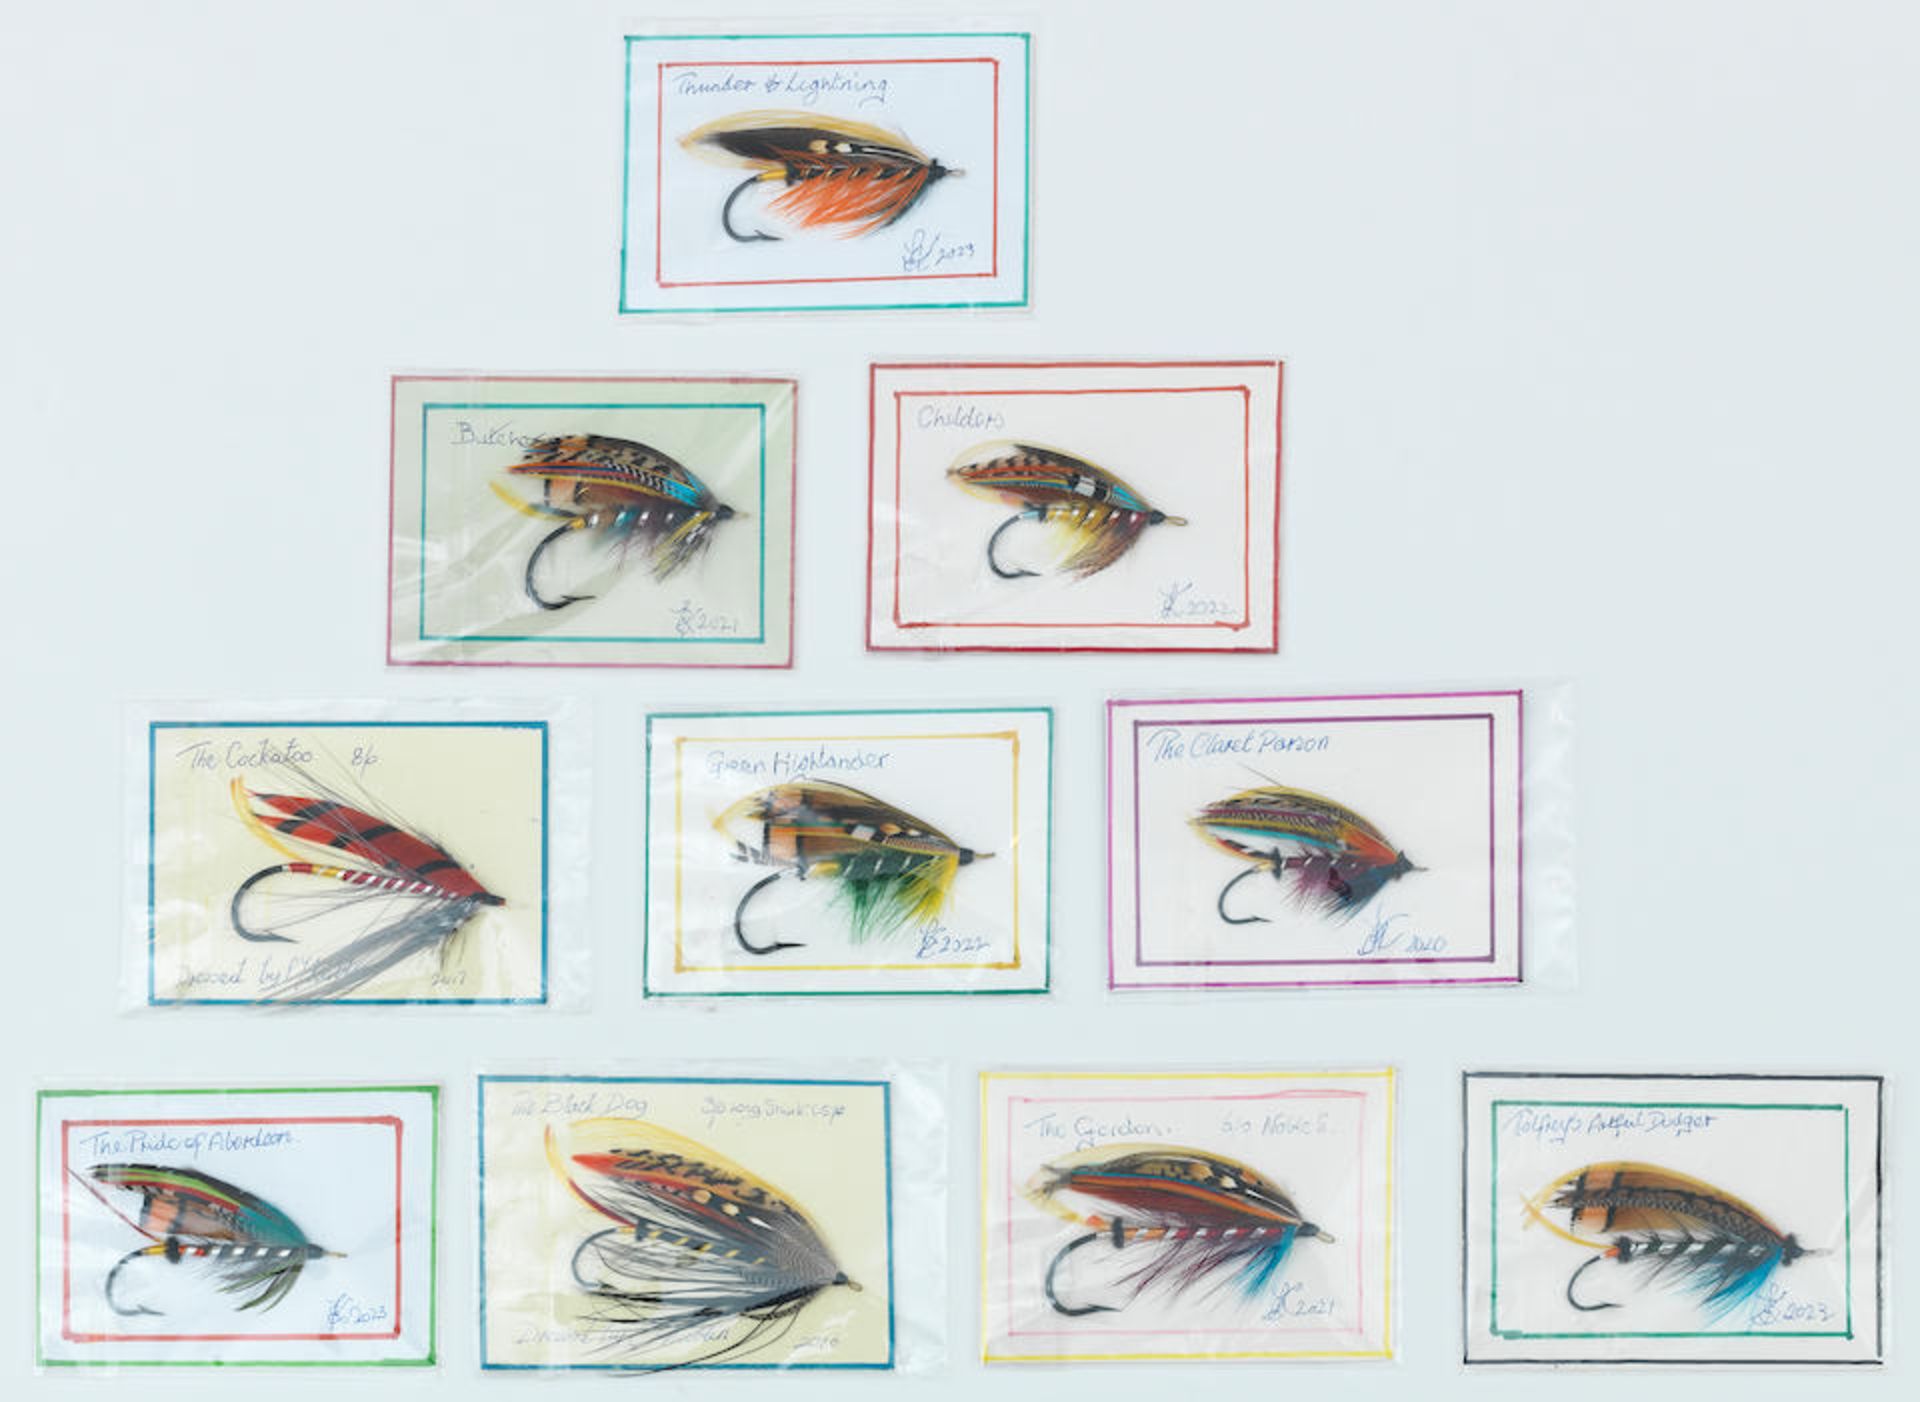 Ten traditionally tied Scottish Salmon flies by Edward J Kublin